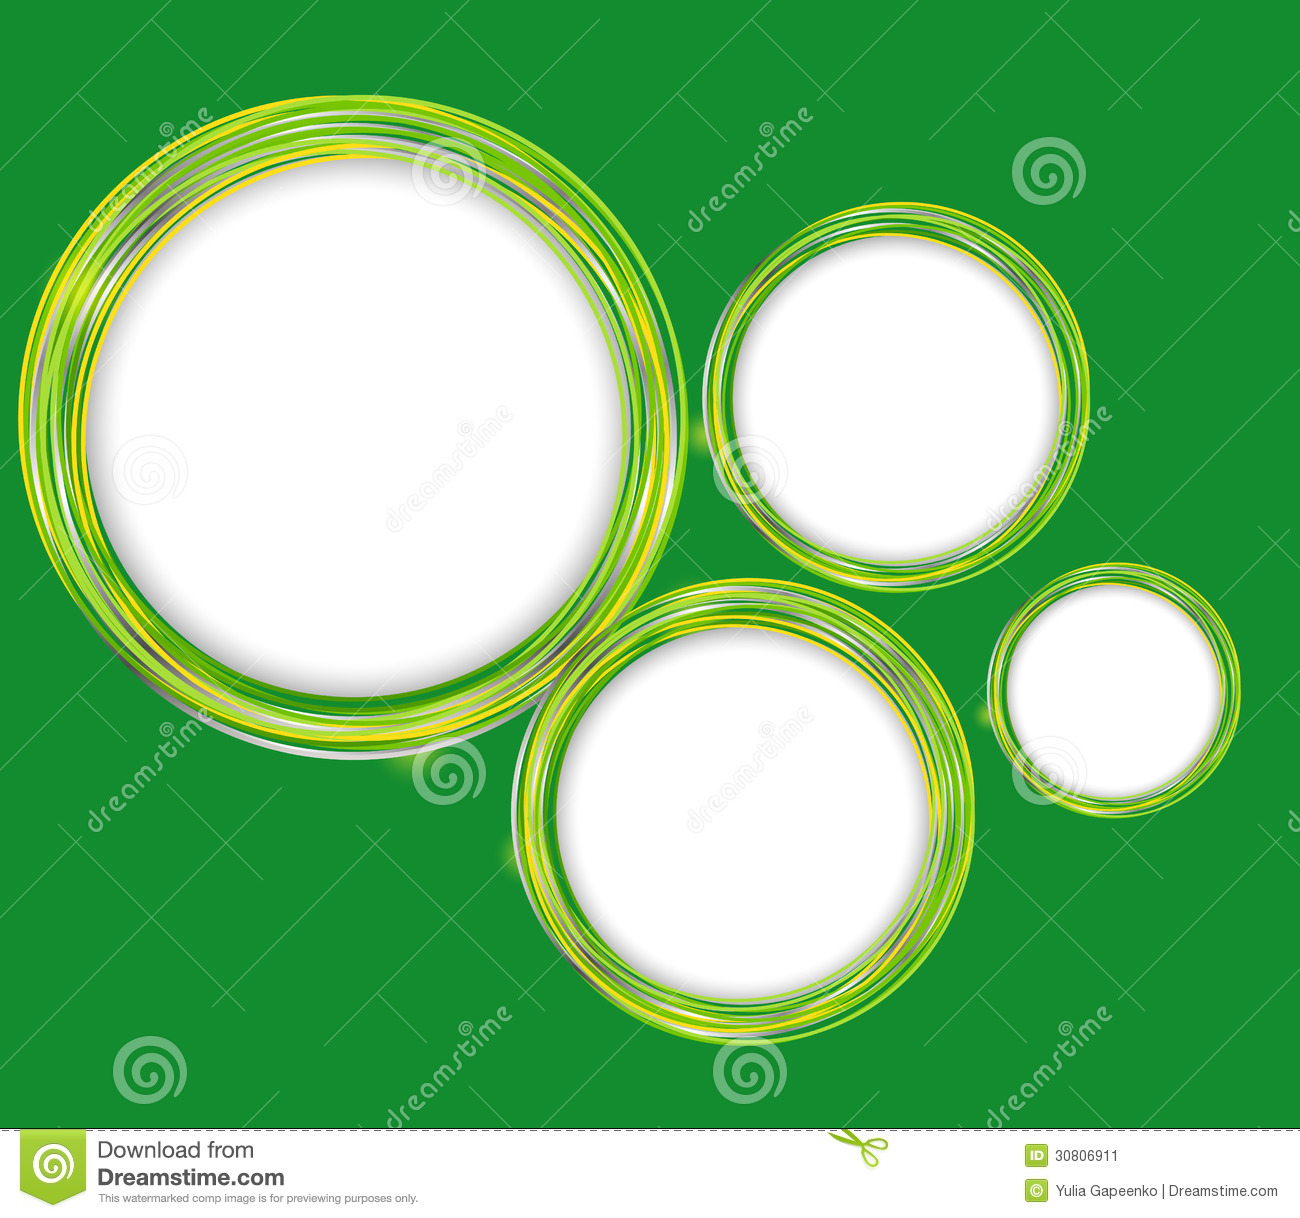 Illustrator Vector Circle Frames